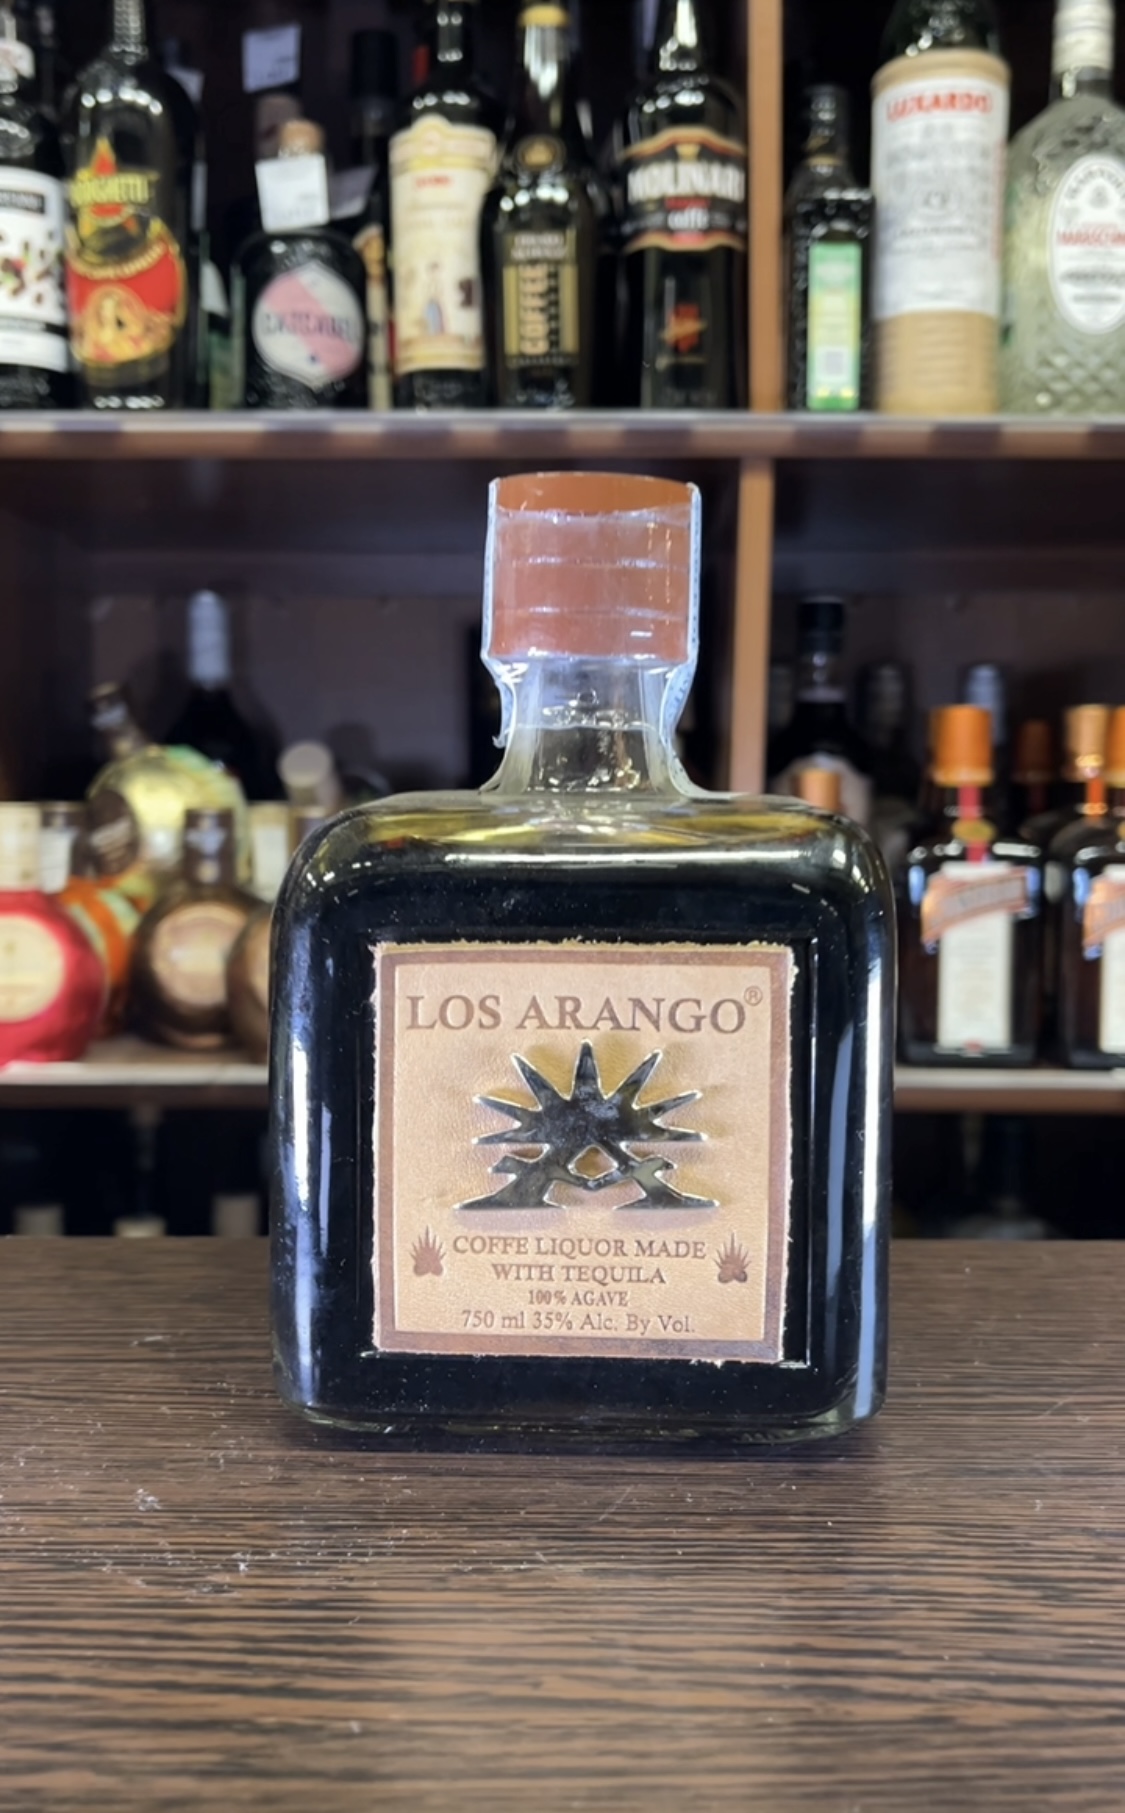 Los Arango Coffee Liquor Ликер Лос Аранго Кофе Ликёр 0.75л